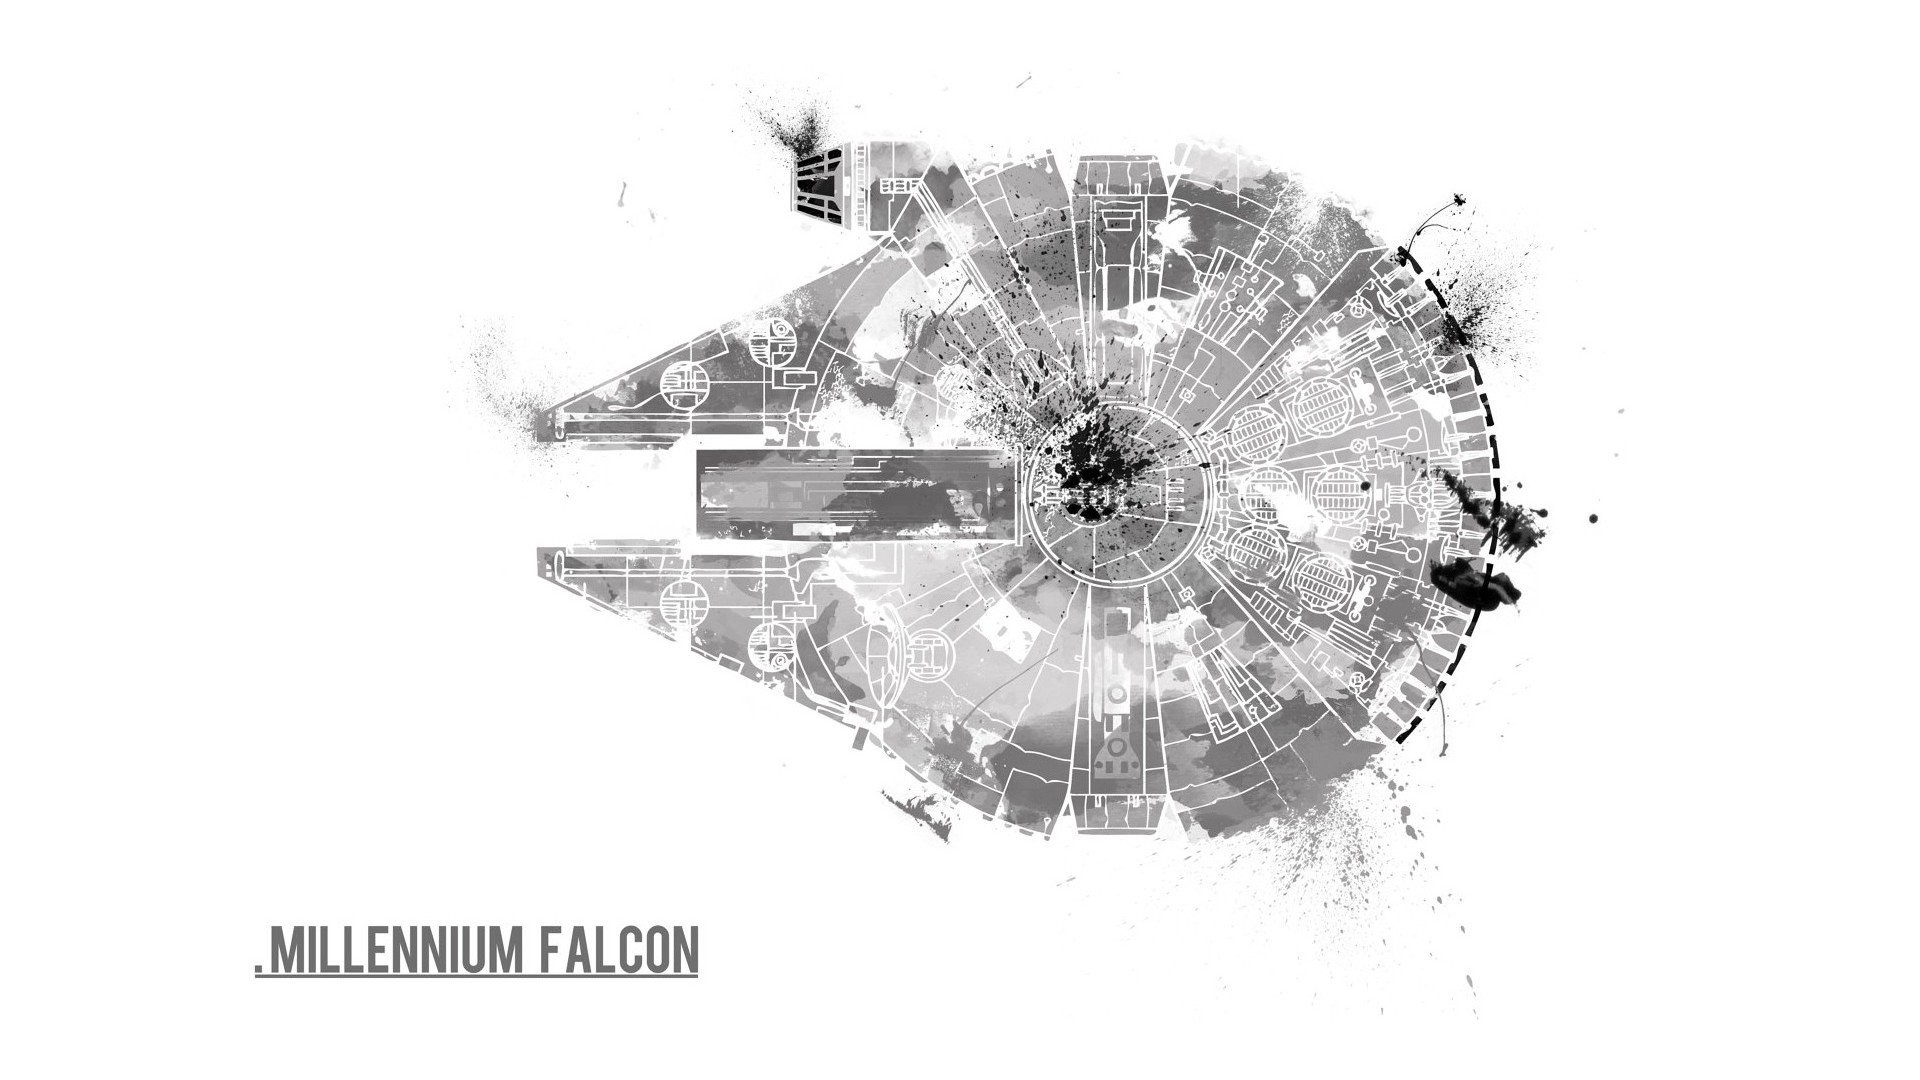 Millennium Falcon wallpaper by TyCran16  Download on ZEDGE  f267